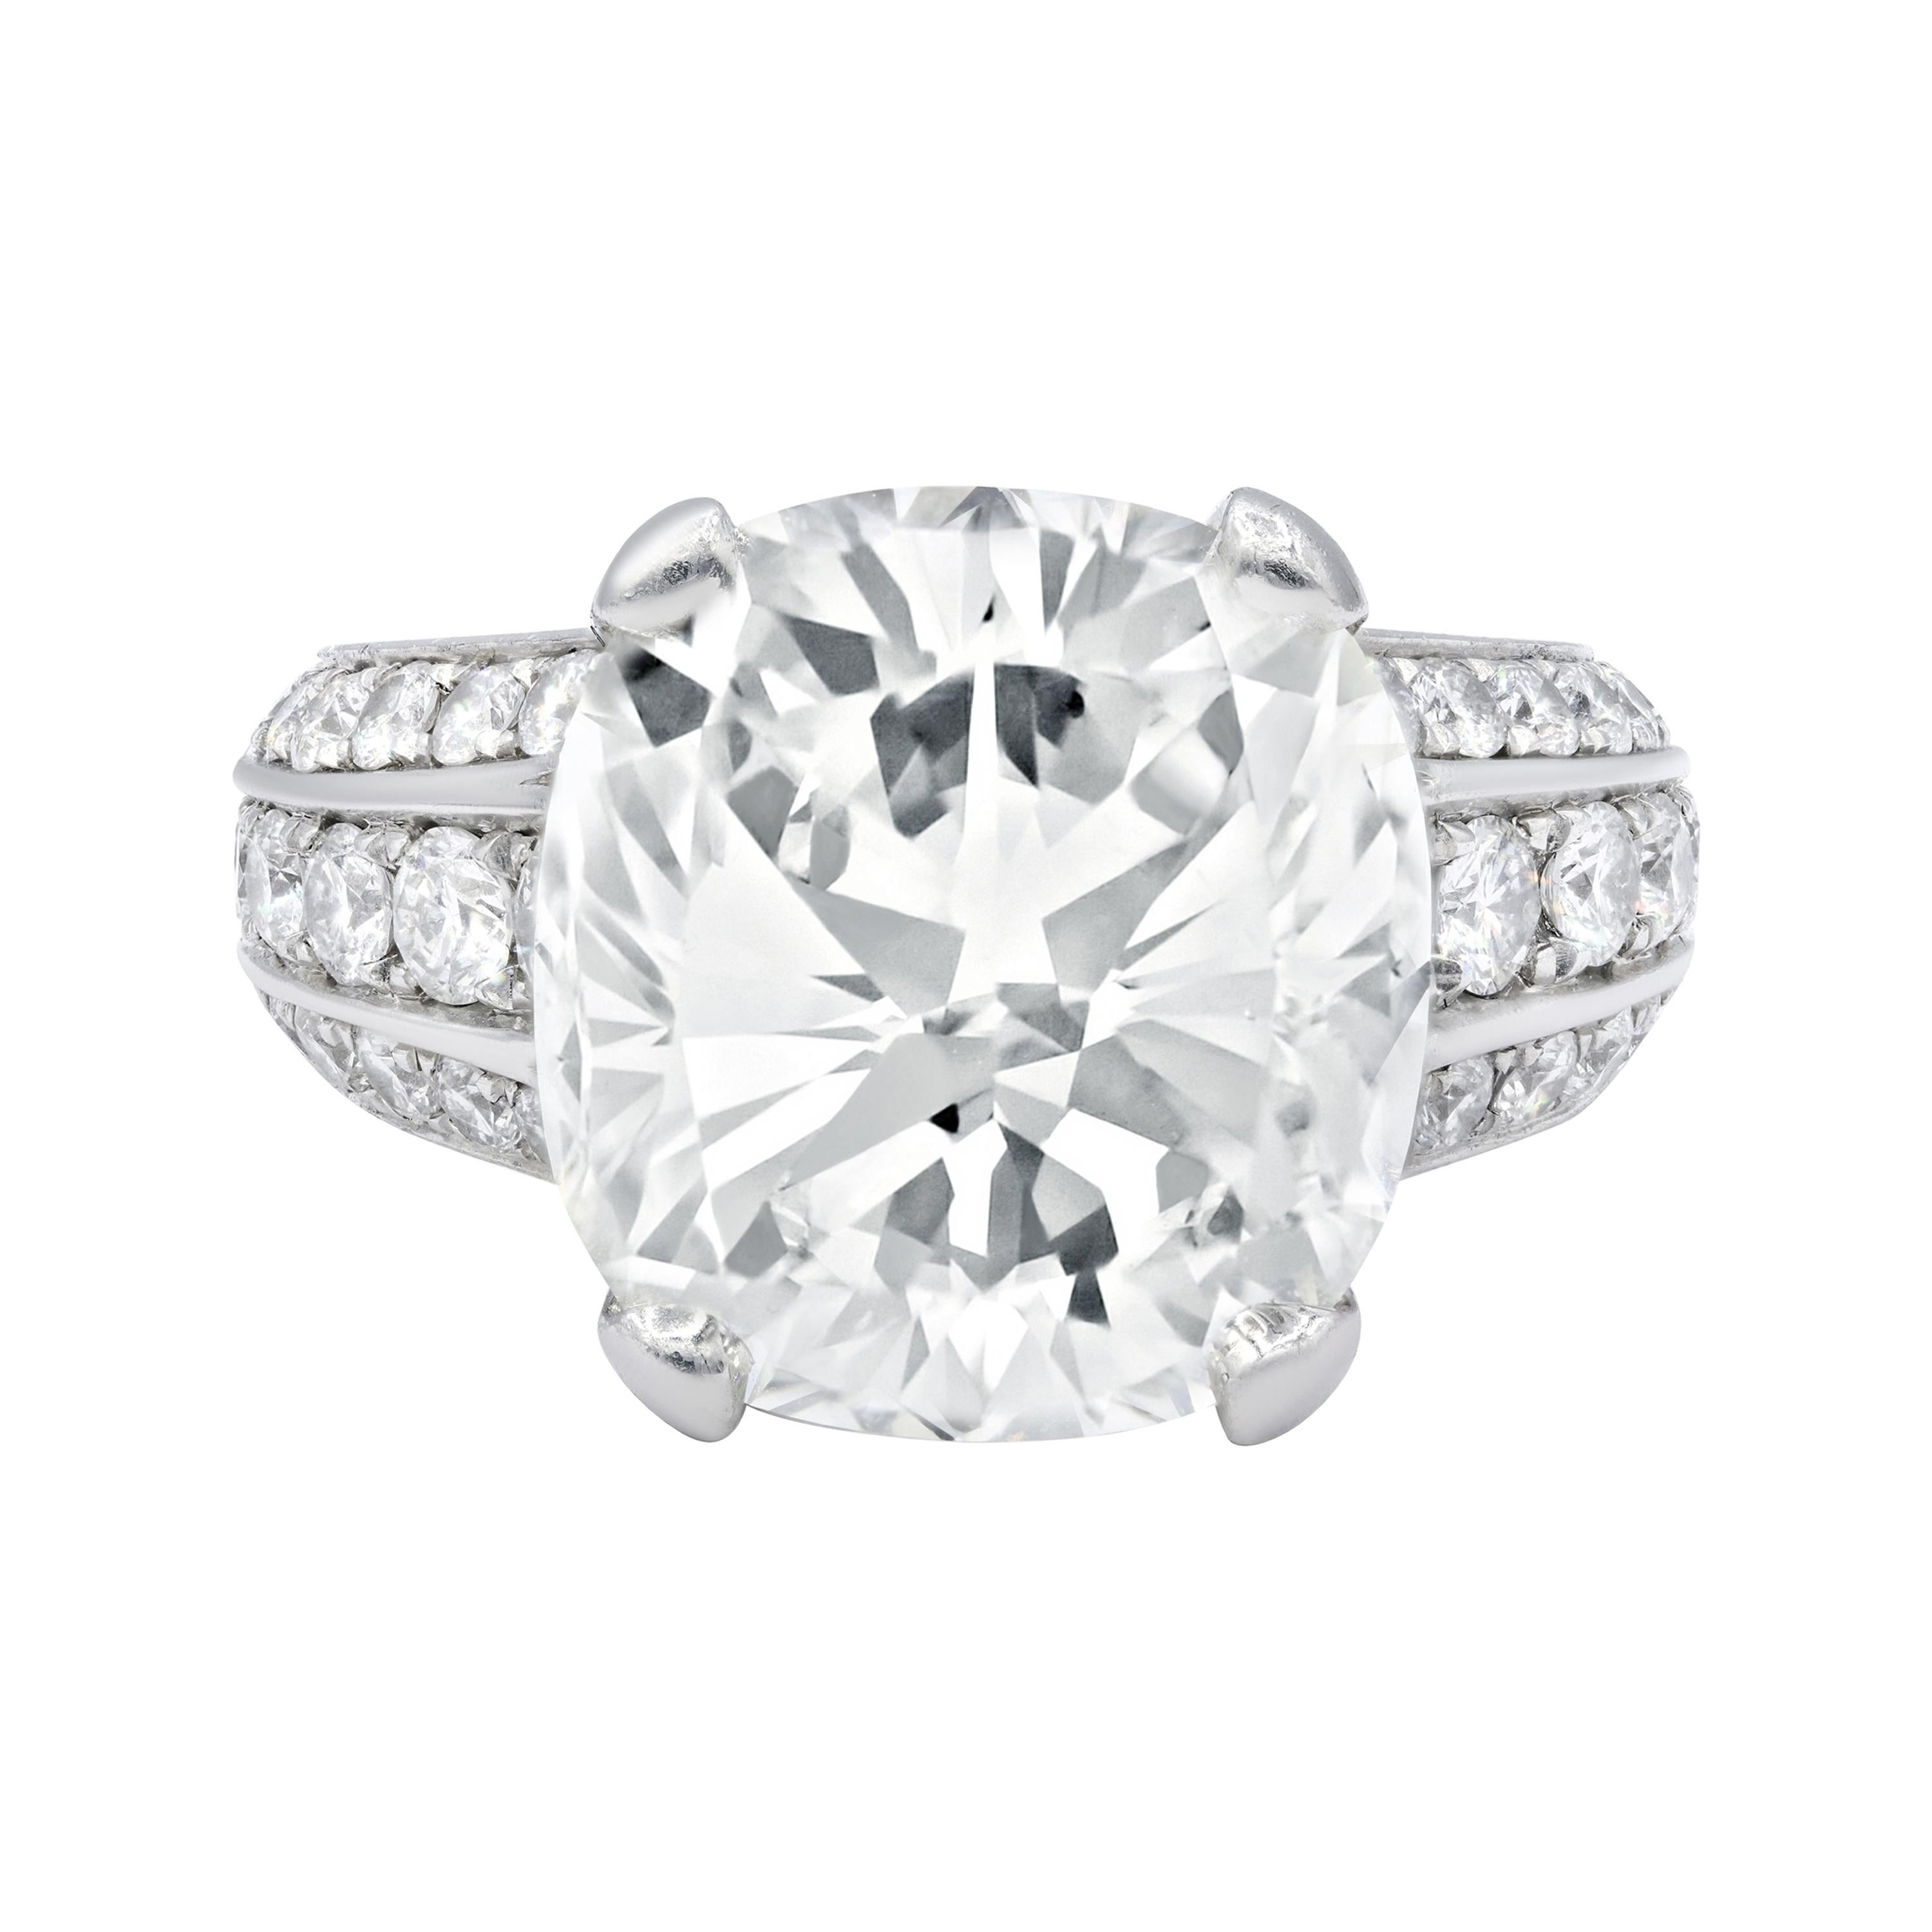 Unique Engagement Ring with Cushion Cut Diamond Center